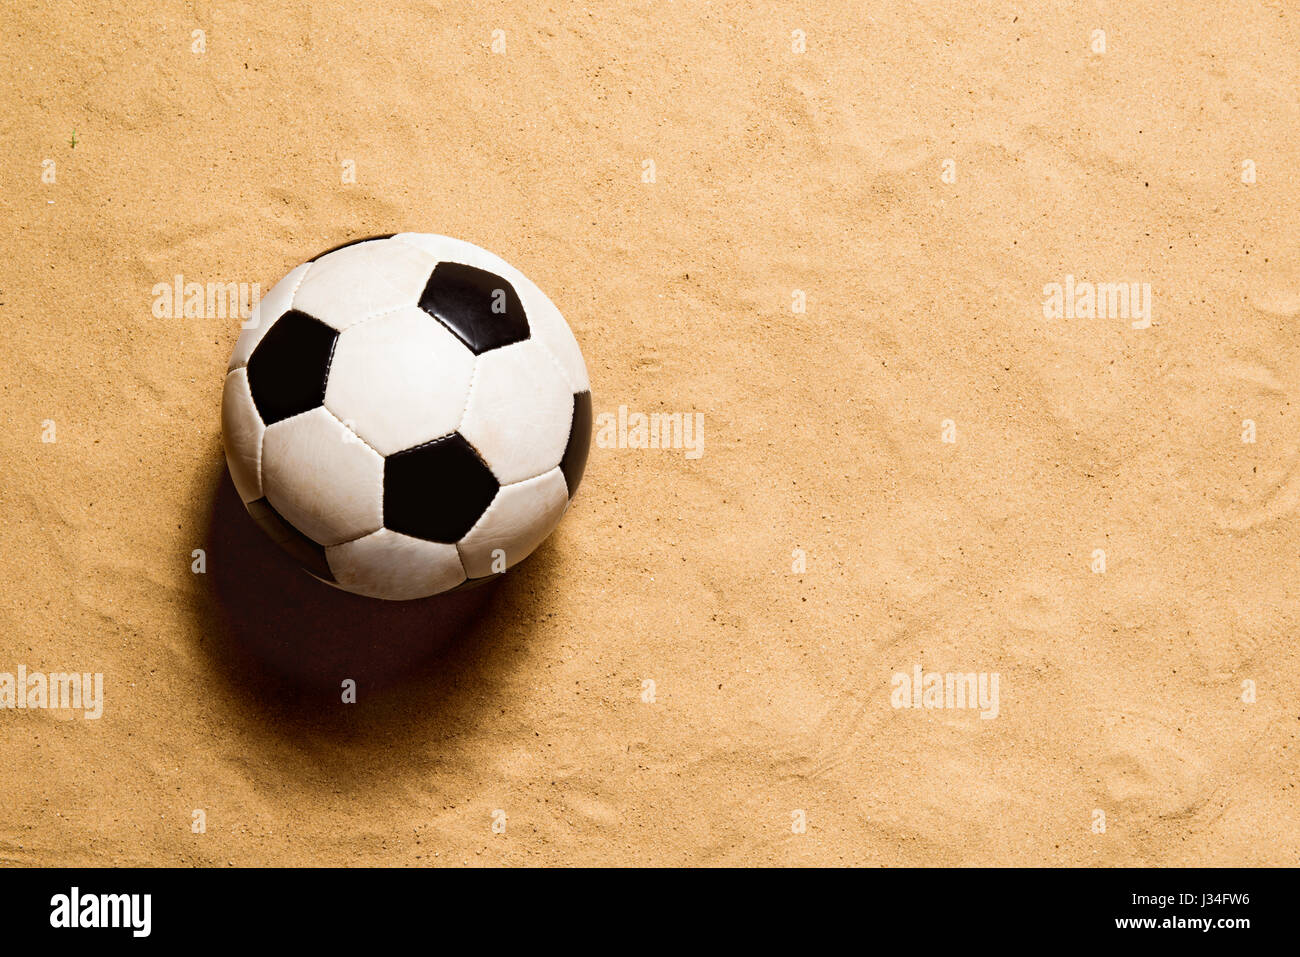 Soccer ball against sandy beach. Studio shot. Copy space. Stock Photo